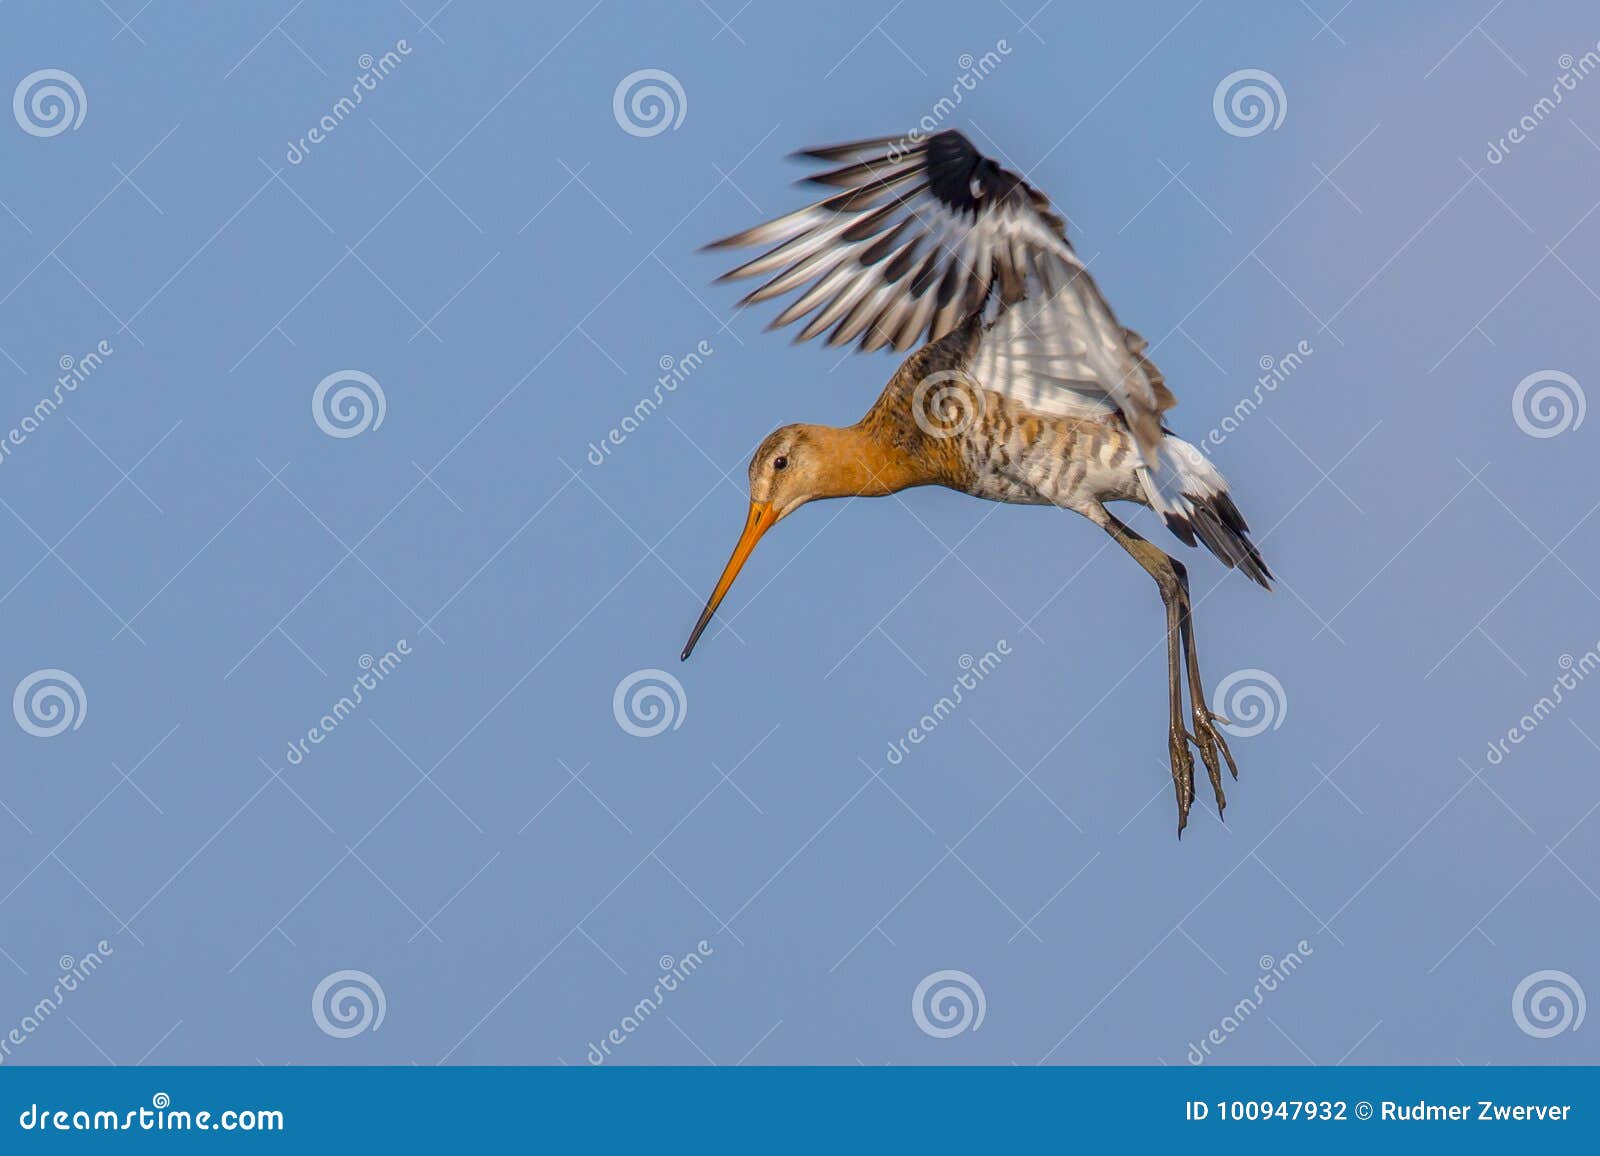 black-tailed godwit wader bird preparing for landing